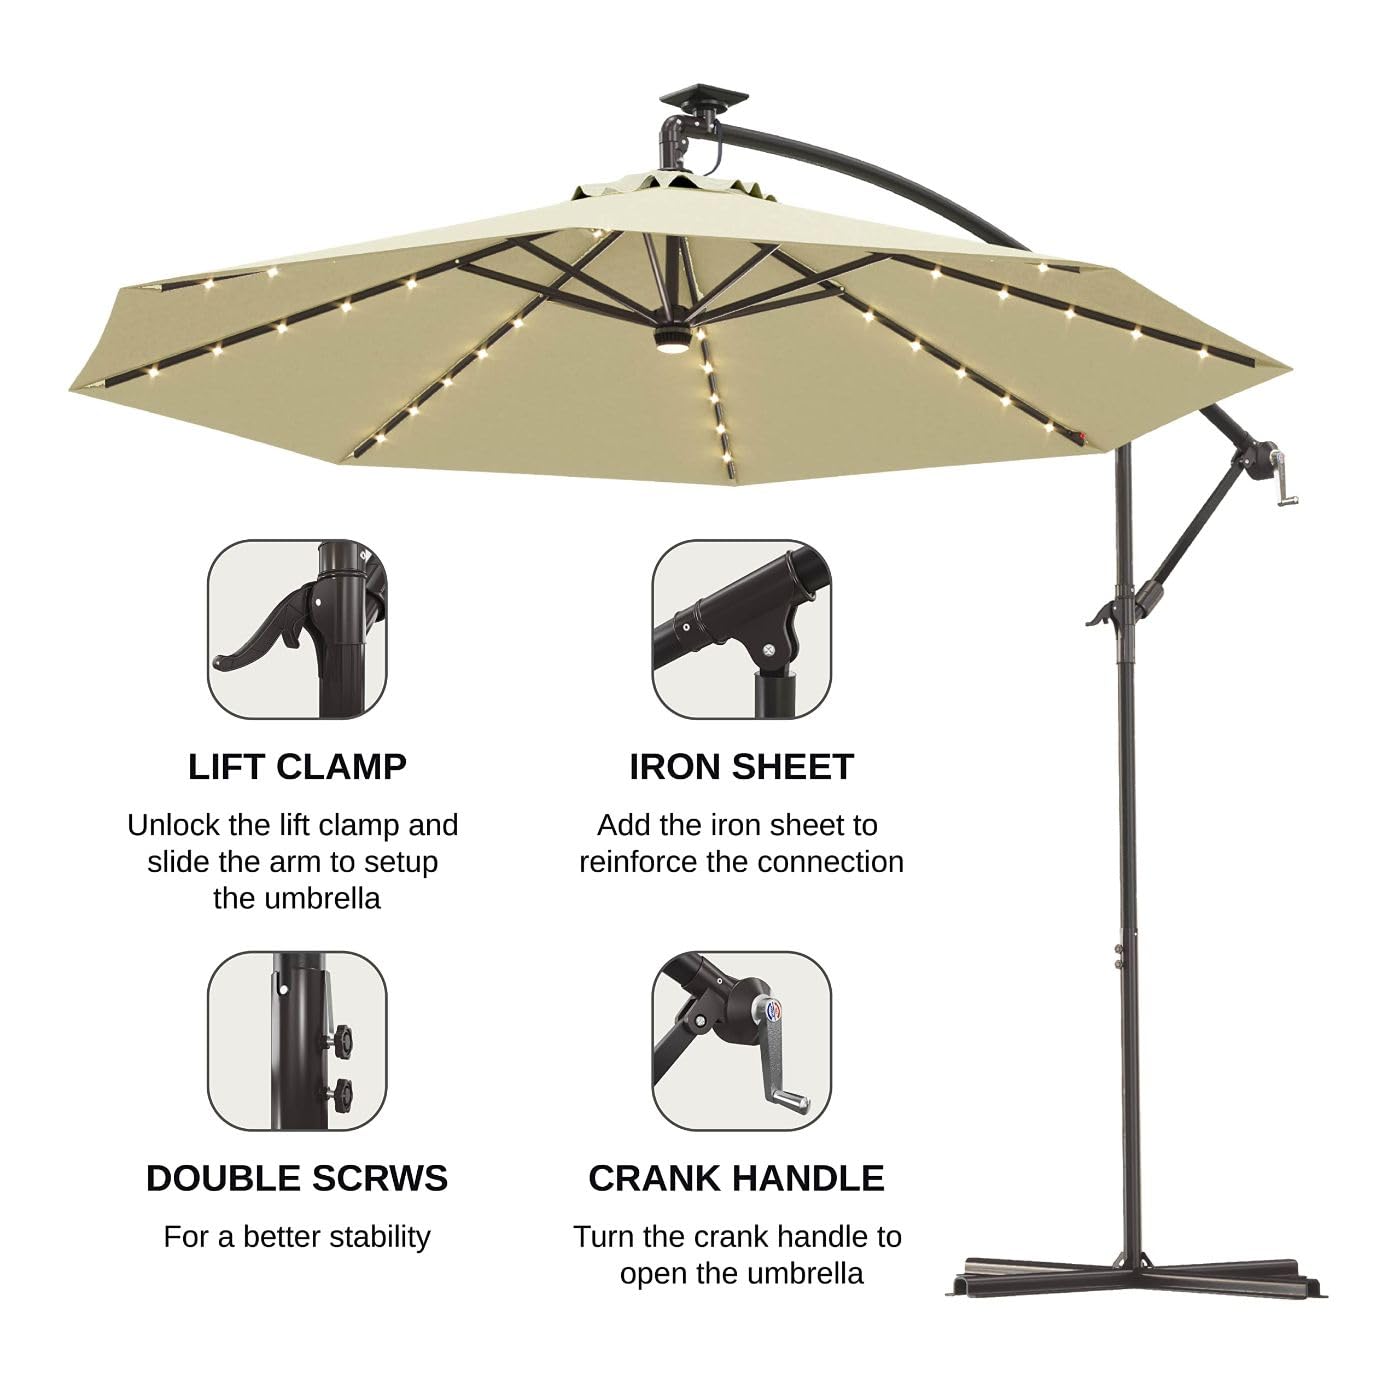 East Oak Offset Patio Umbrella, 10ft Hanging Cantilever Outdoor Umbrellas with 40 Solar Lights,8 Ribs,Waterproof UV 30+ Protection and Fade Resistant Outdoor Umbrella, Beige